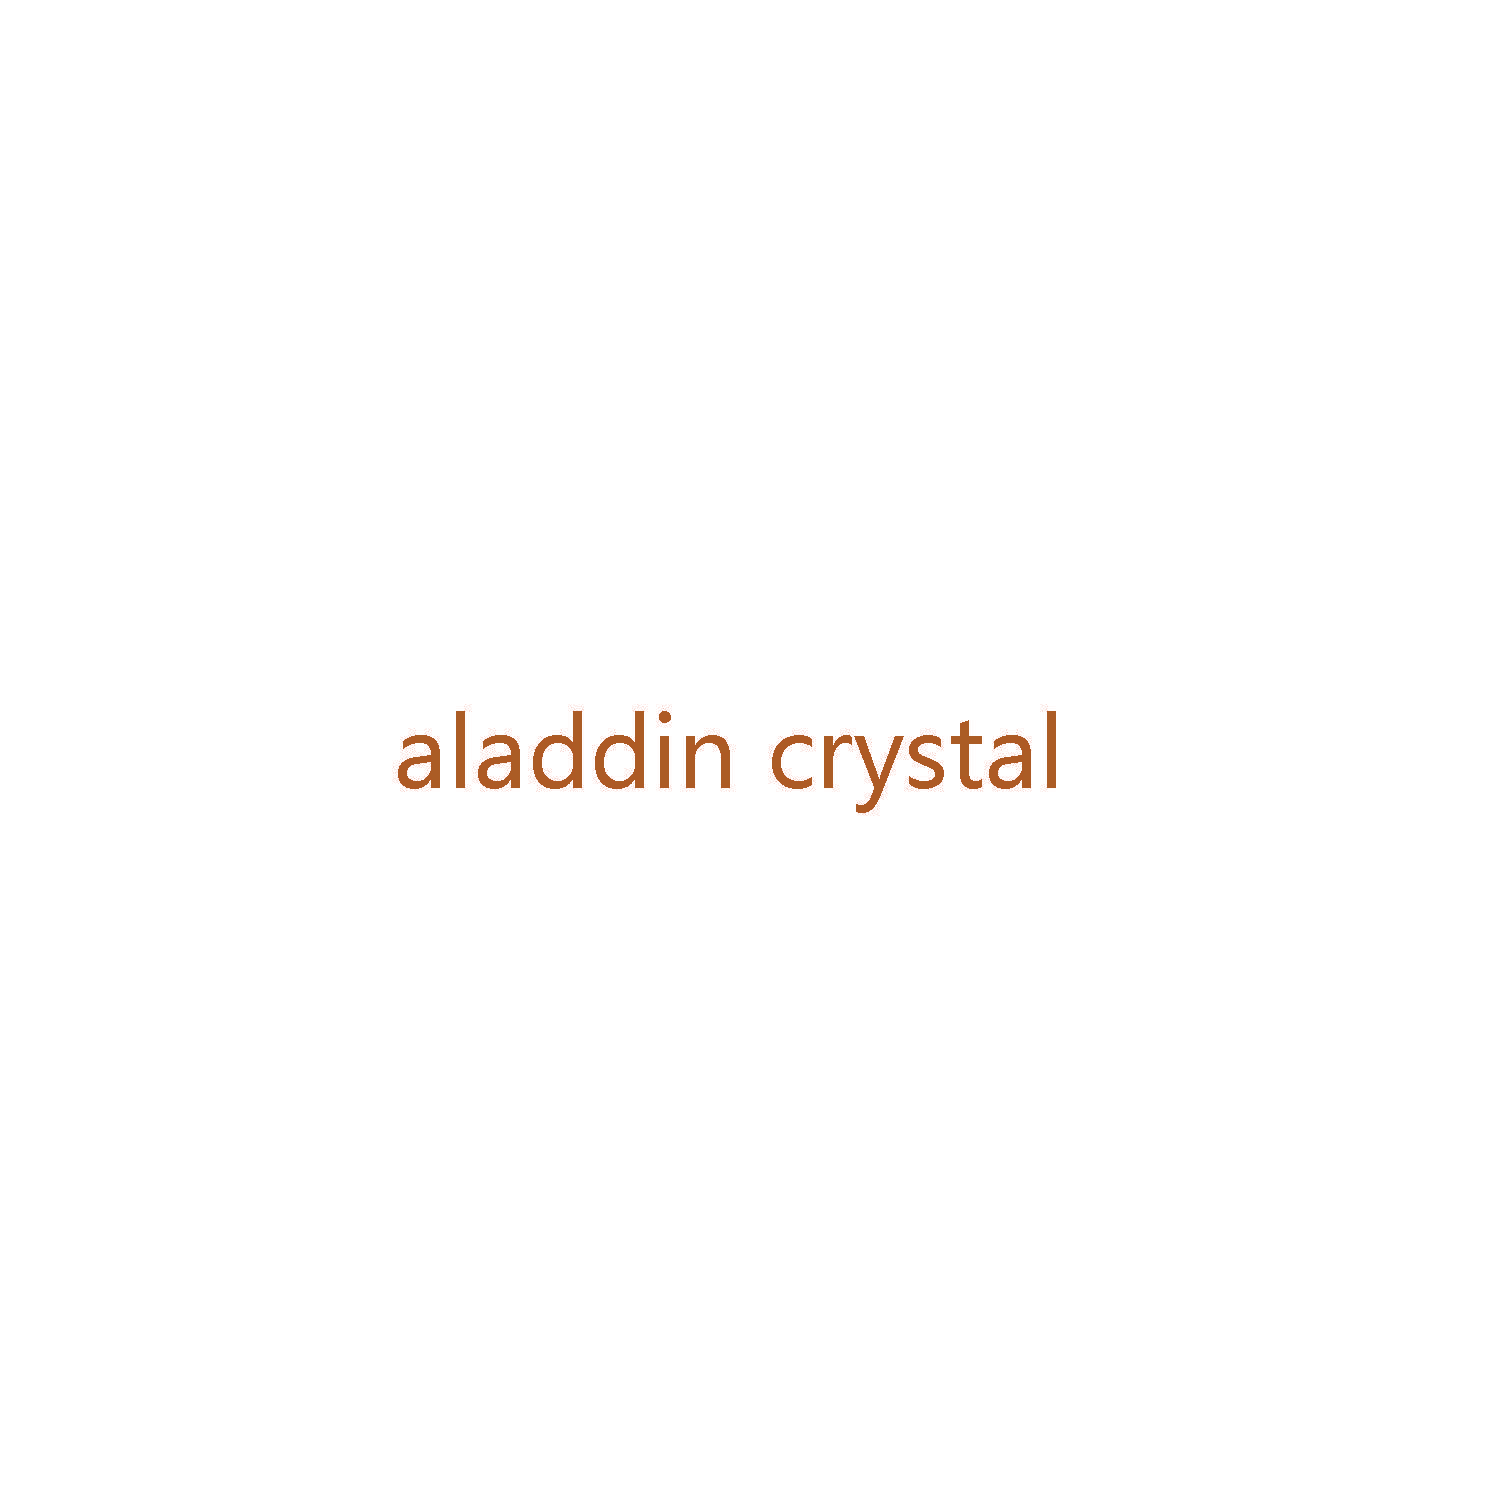 aladdin crystal